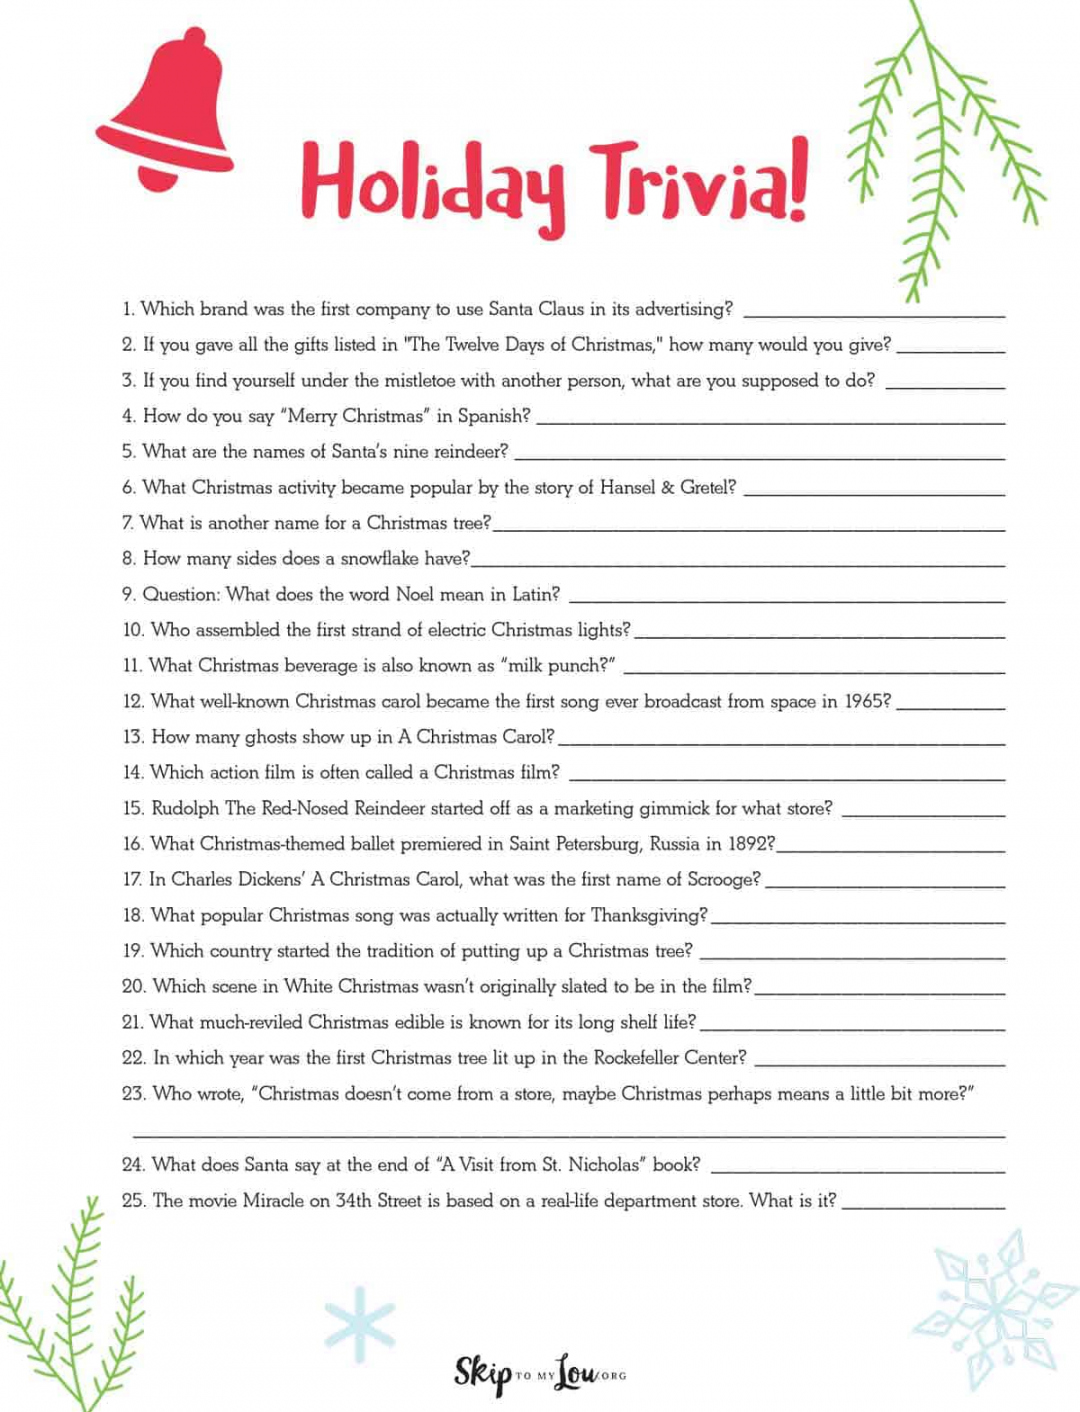 Christmas Trivia  Skip To My Lou - FREE Printables - Free Christmas Trivia Questions And Answers Printable